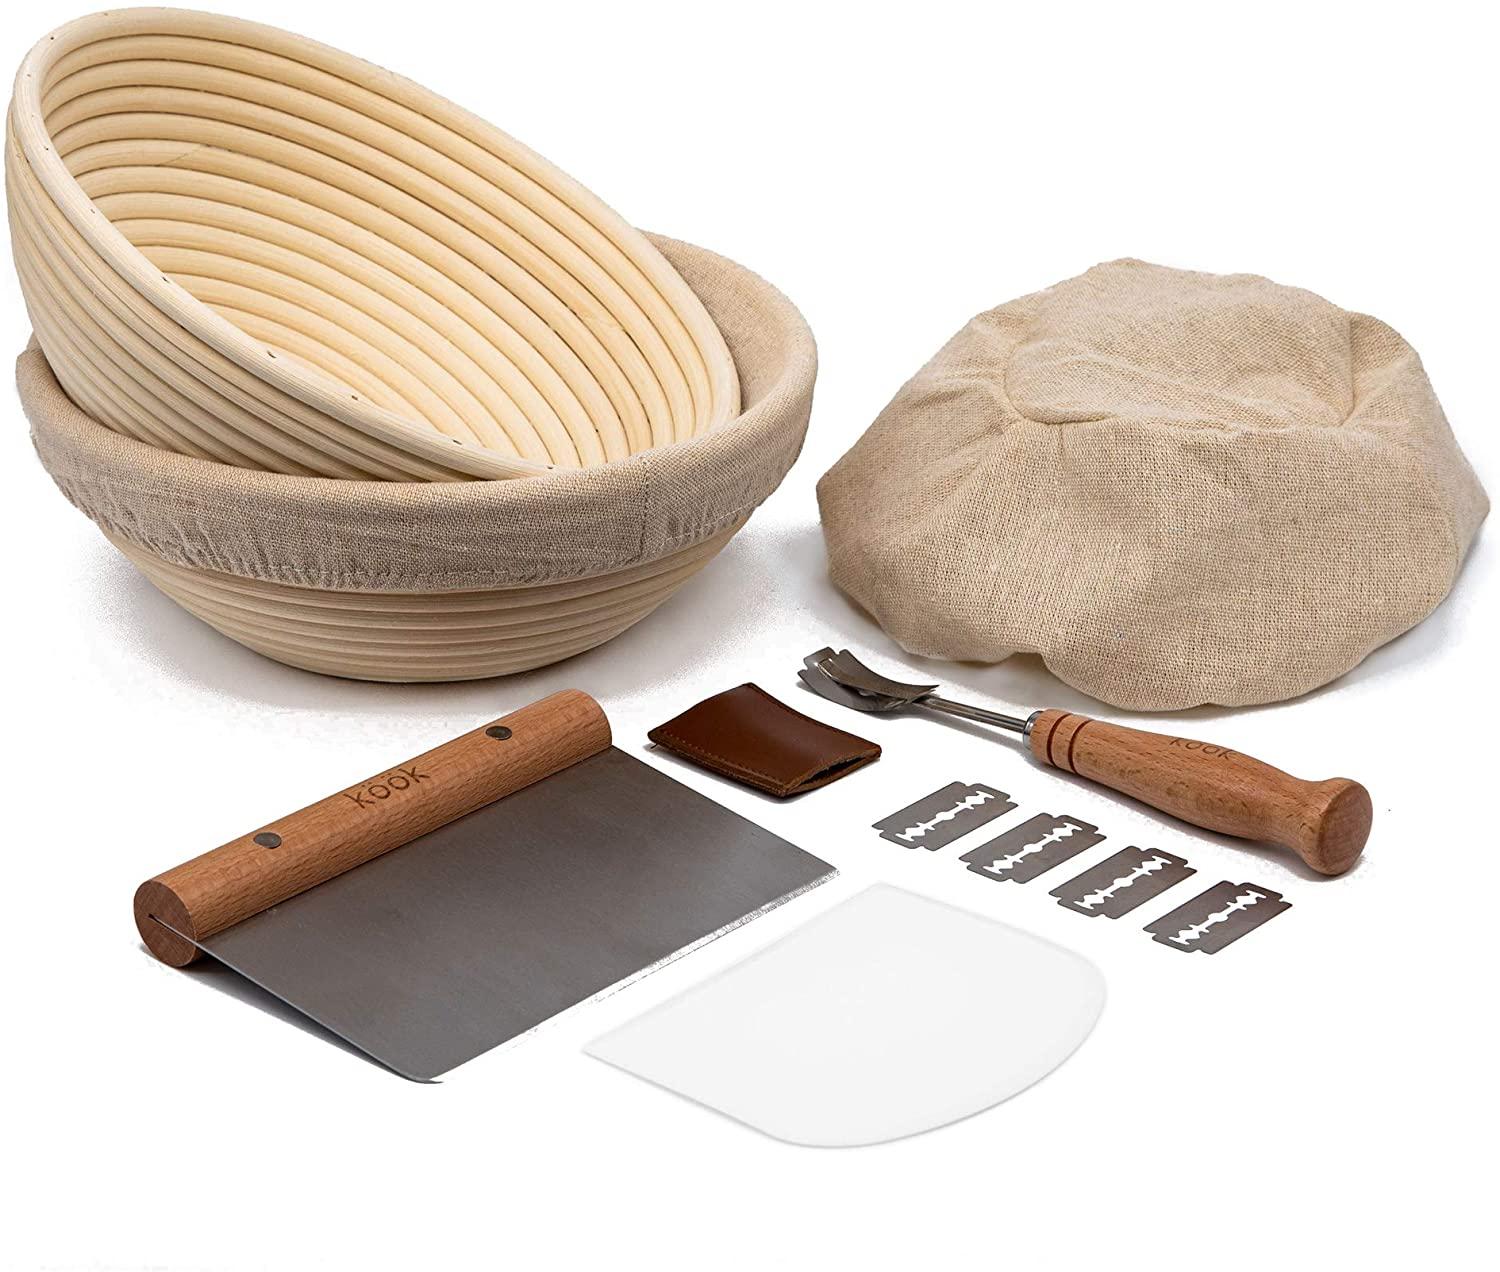 Kook Sourdough Bread Proofing Set for $21.97 Shipped